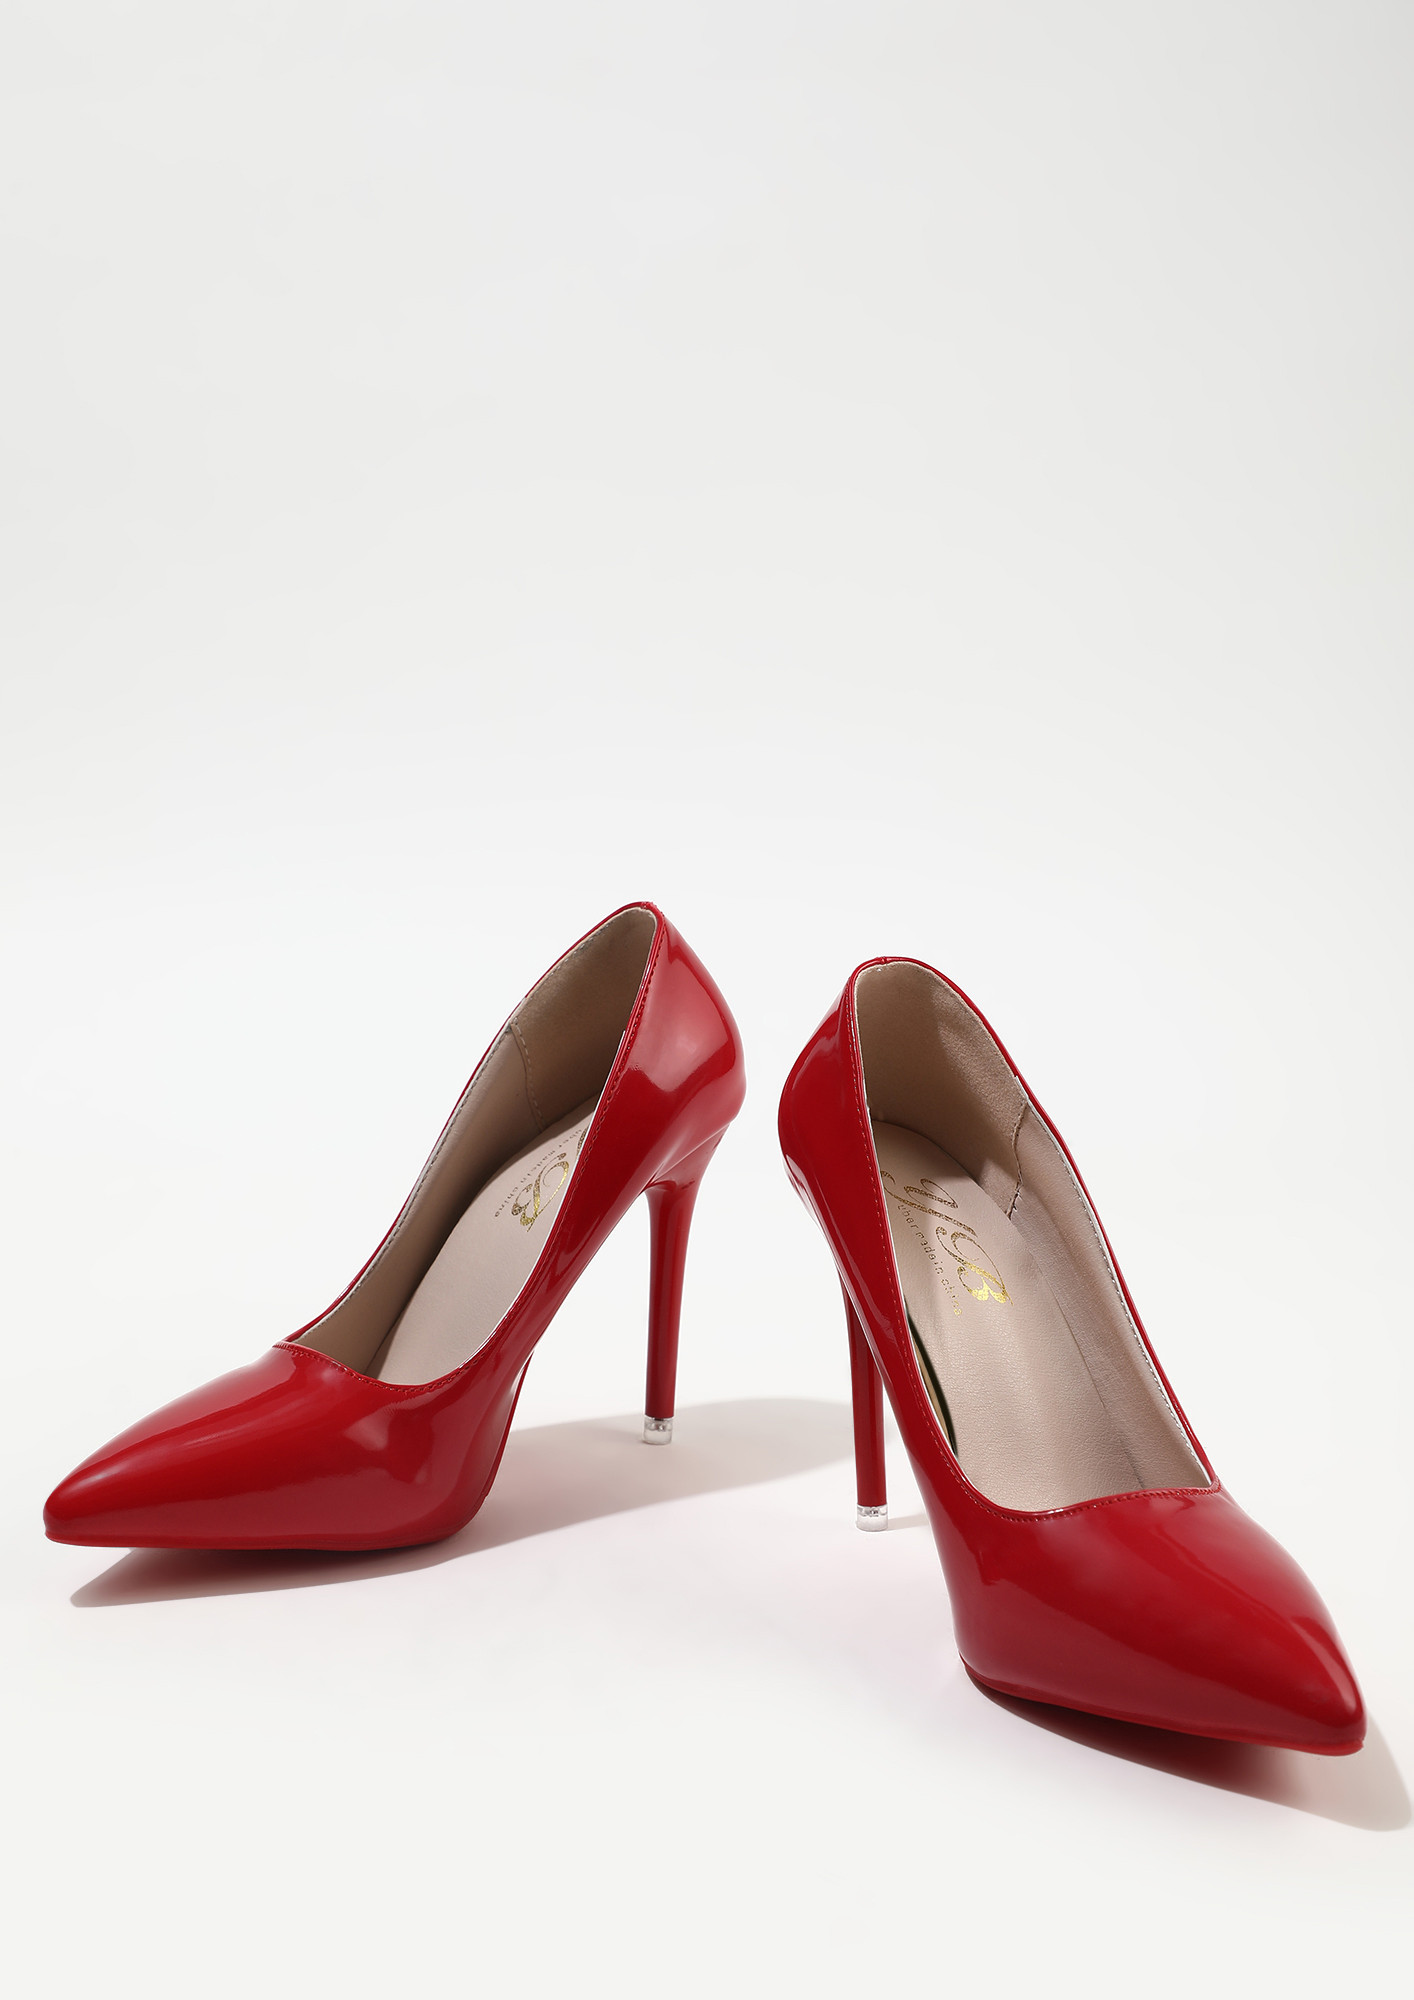 Download Red High Heel Shoes HQ PNG Image | FreePNGImg